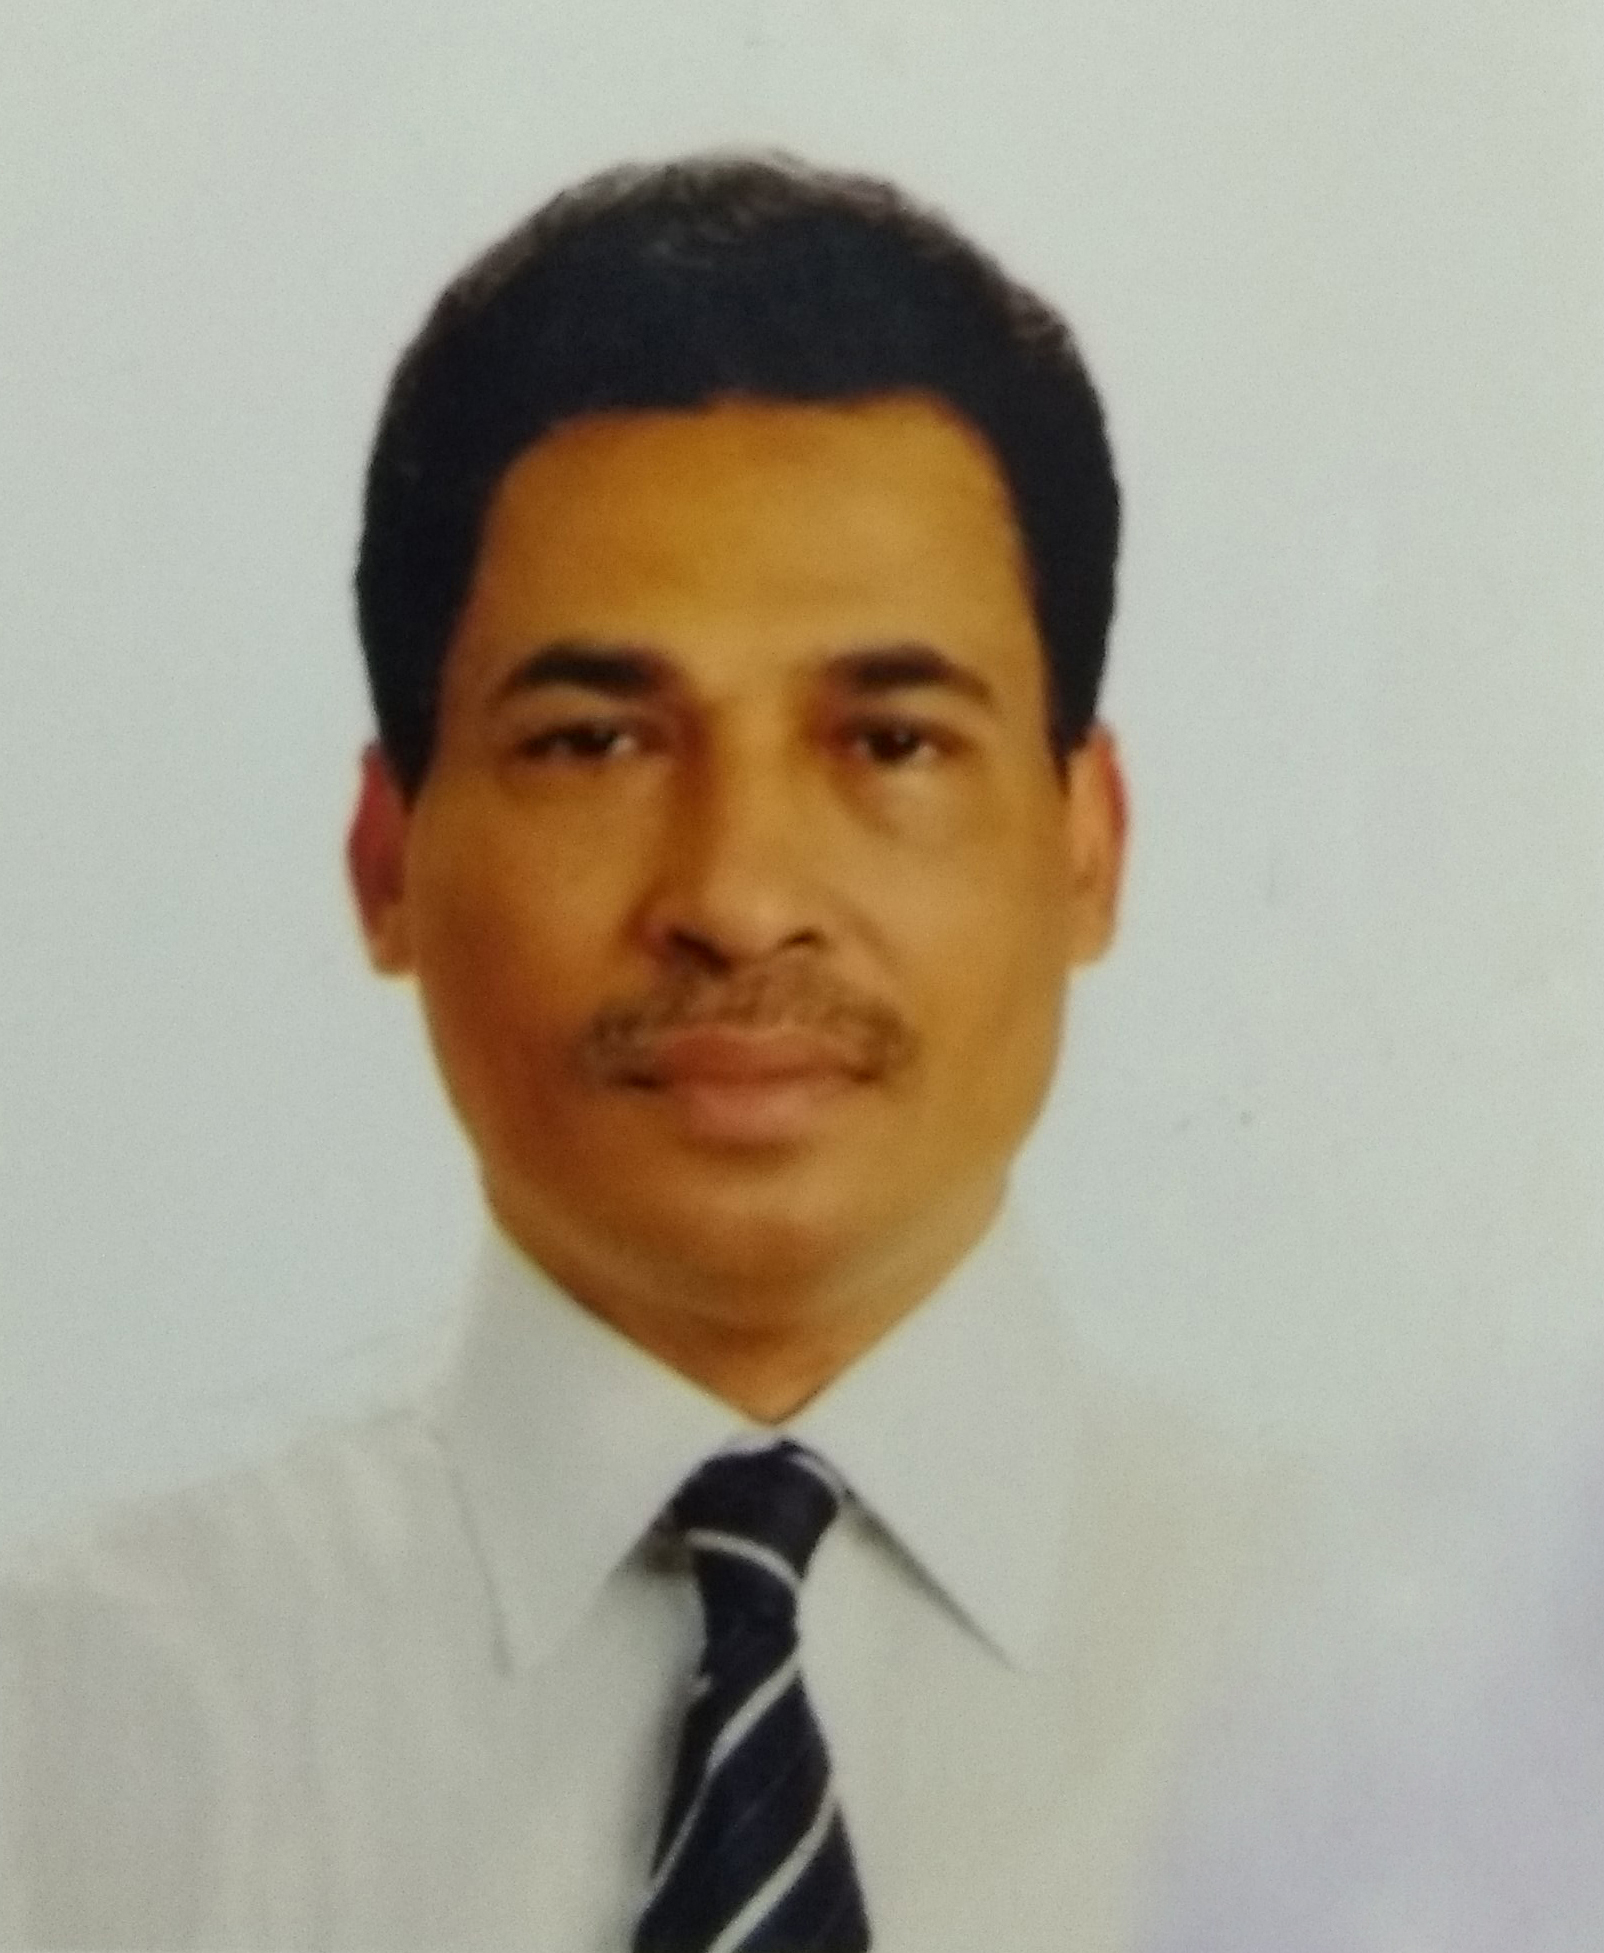 Mr. Saleh Ahmed